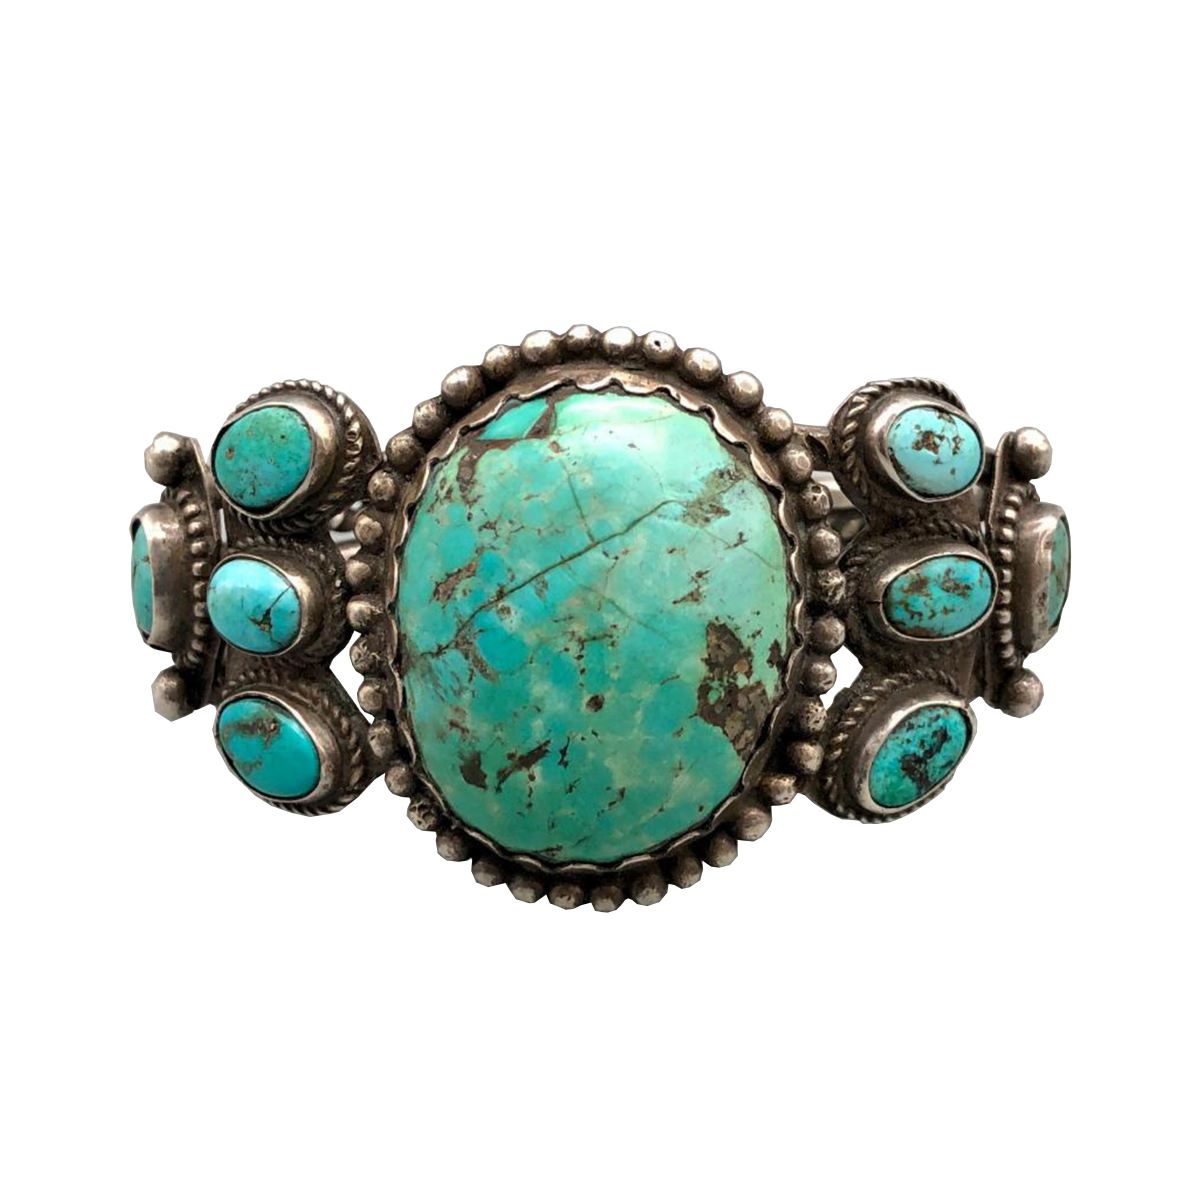 Hefty Vintage Turquoise and Sterling Silver Bracelet